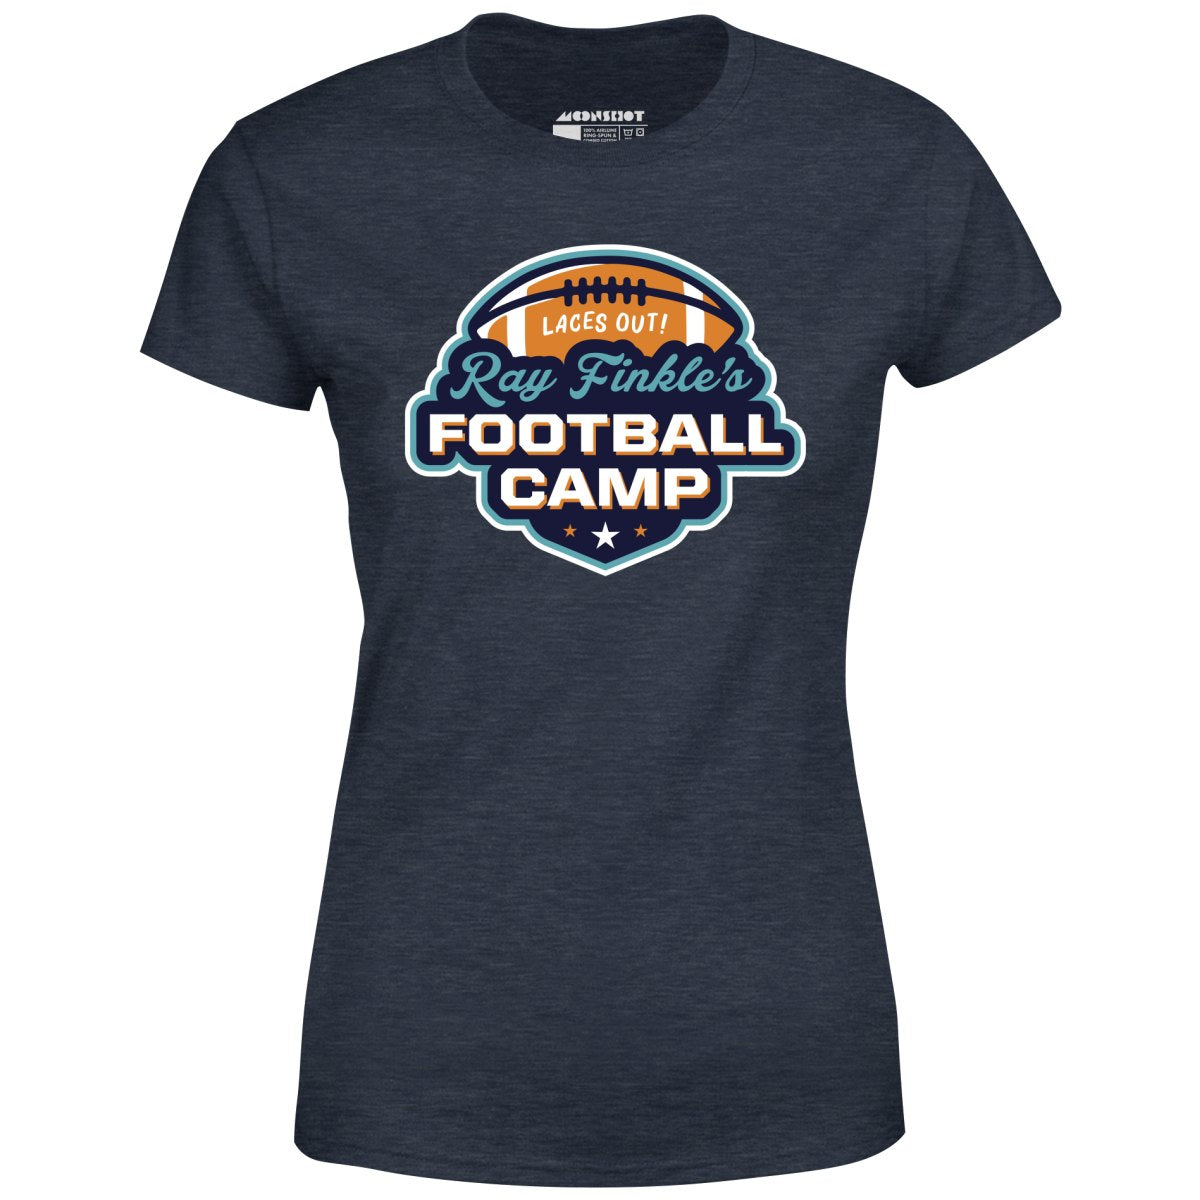 Ray Finkle's Football Camp - Women's T-Shirt